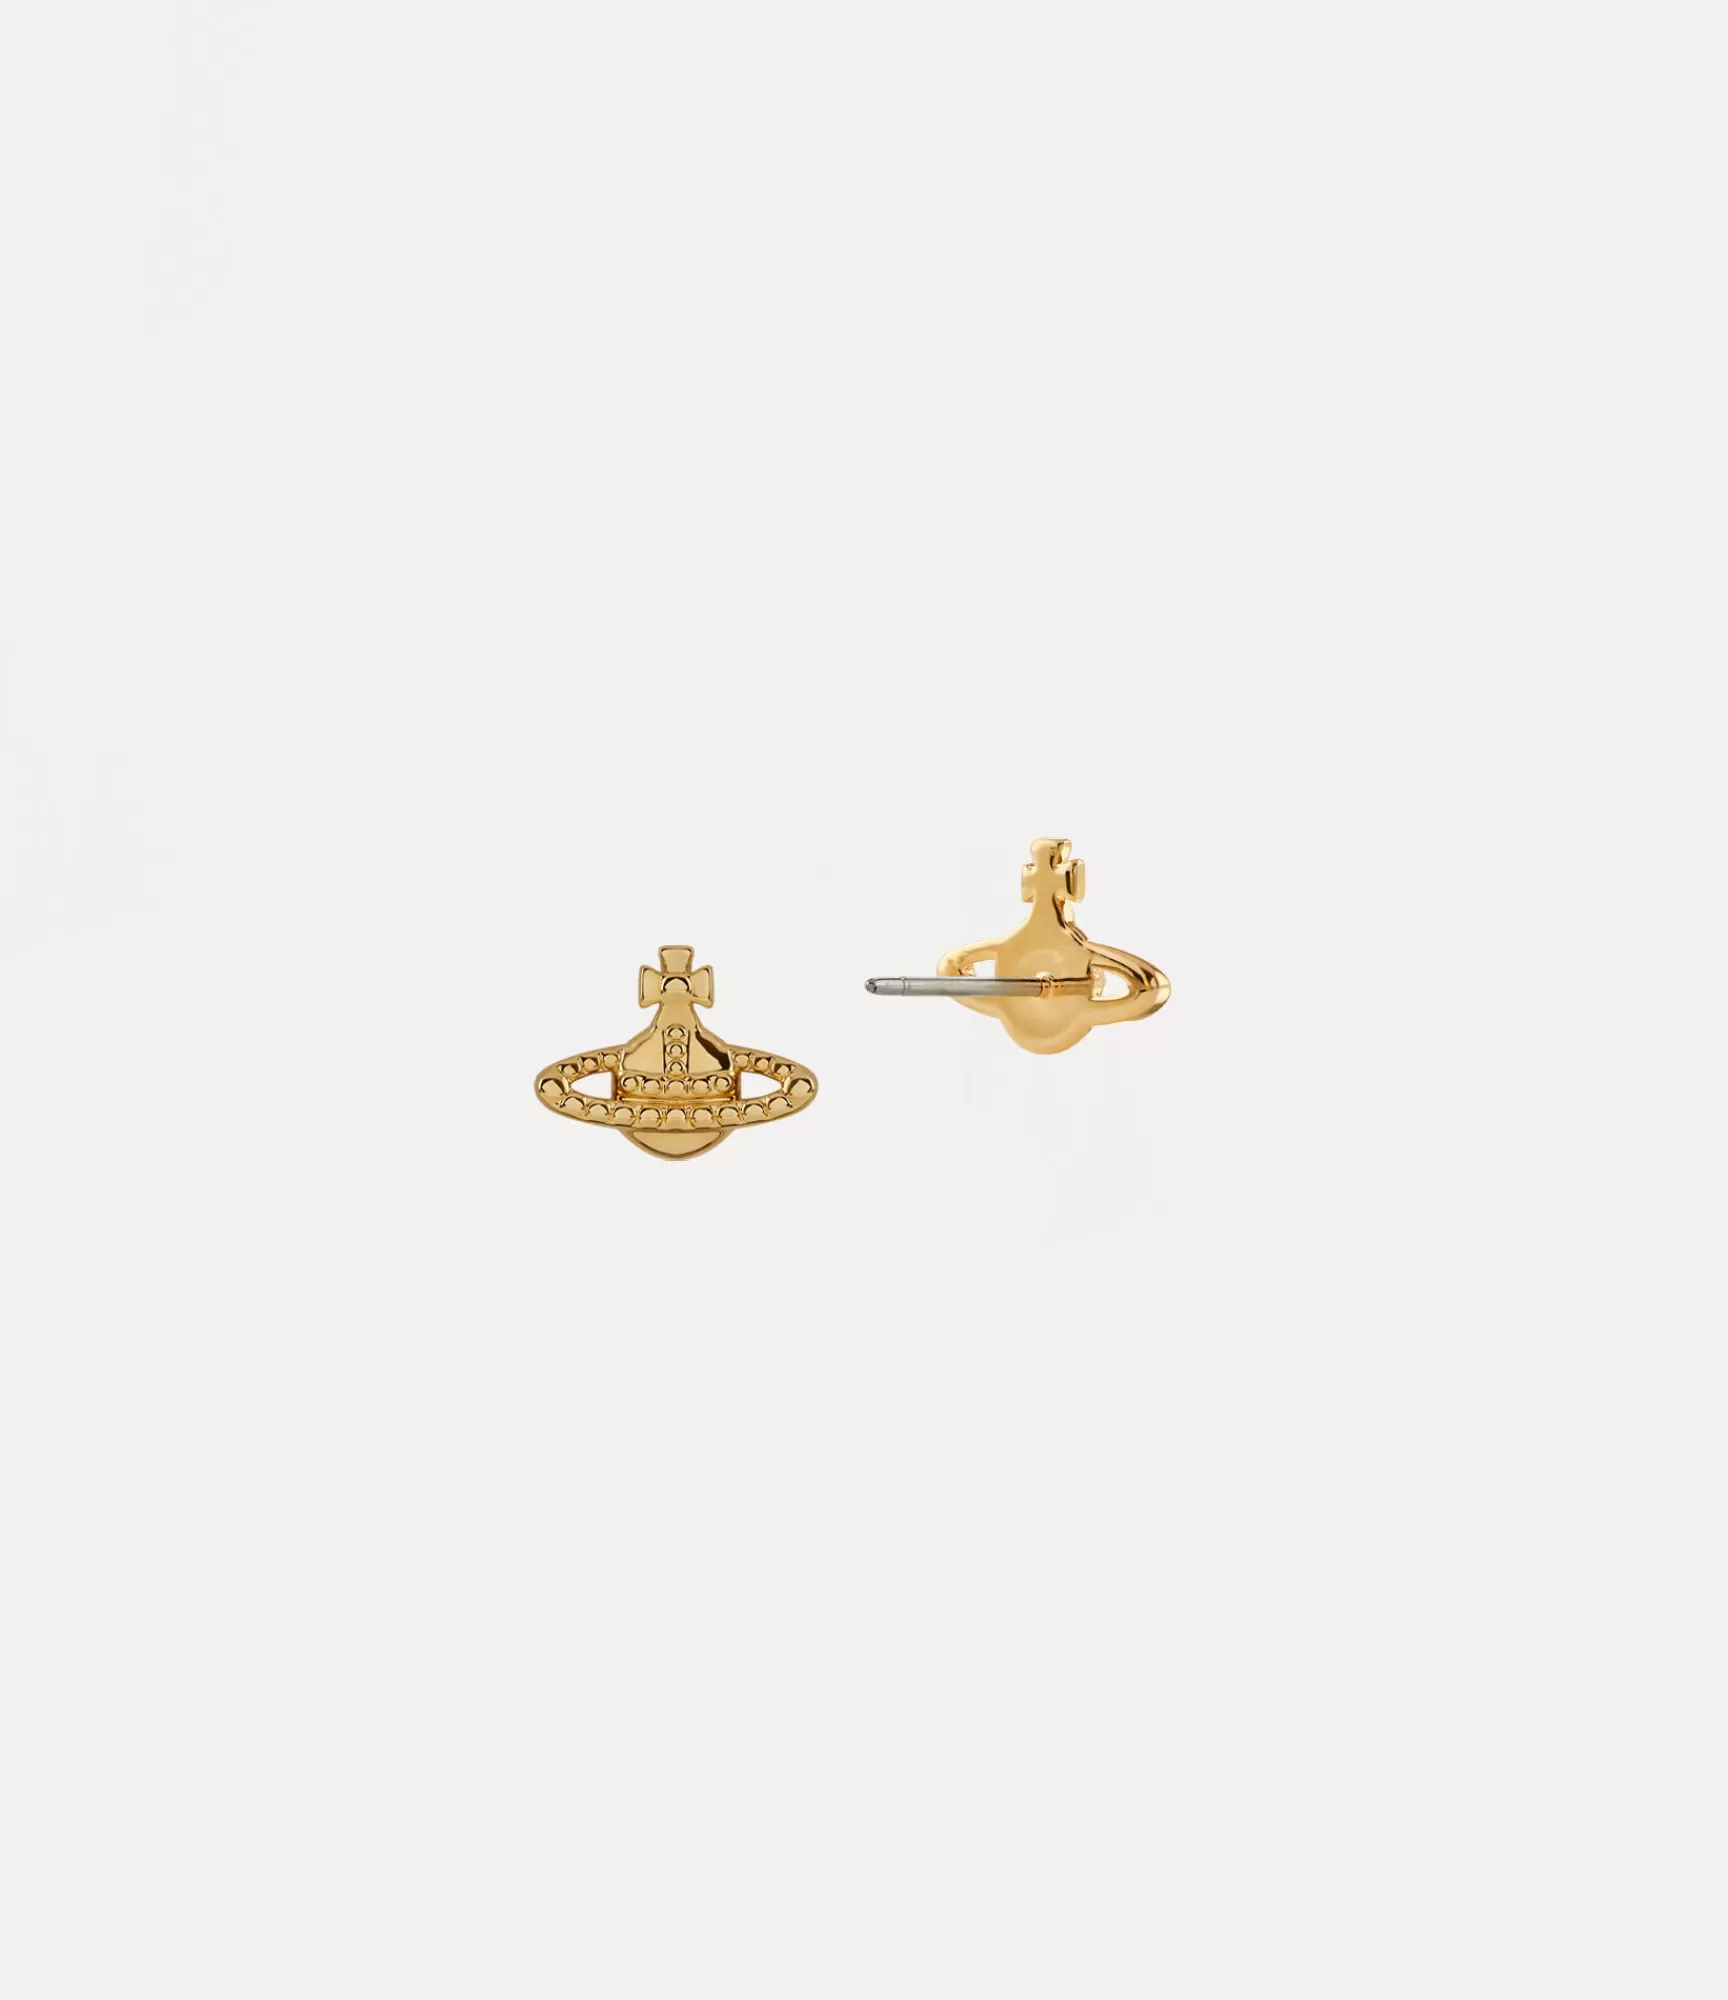 Vivienne Westwood Earrings*Farah earrings Gold